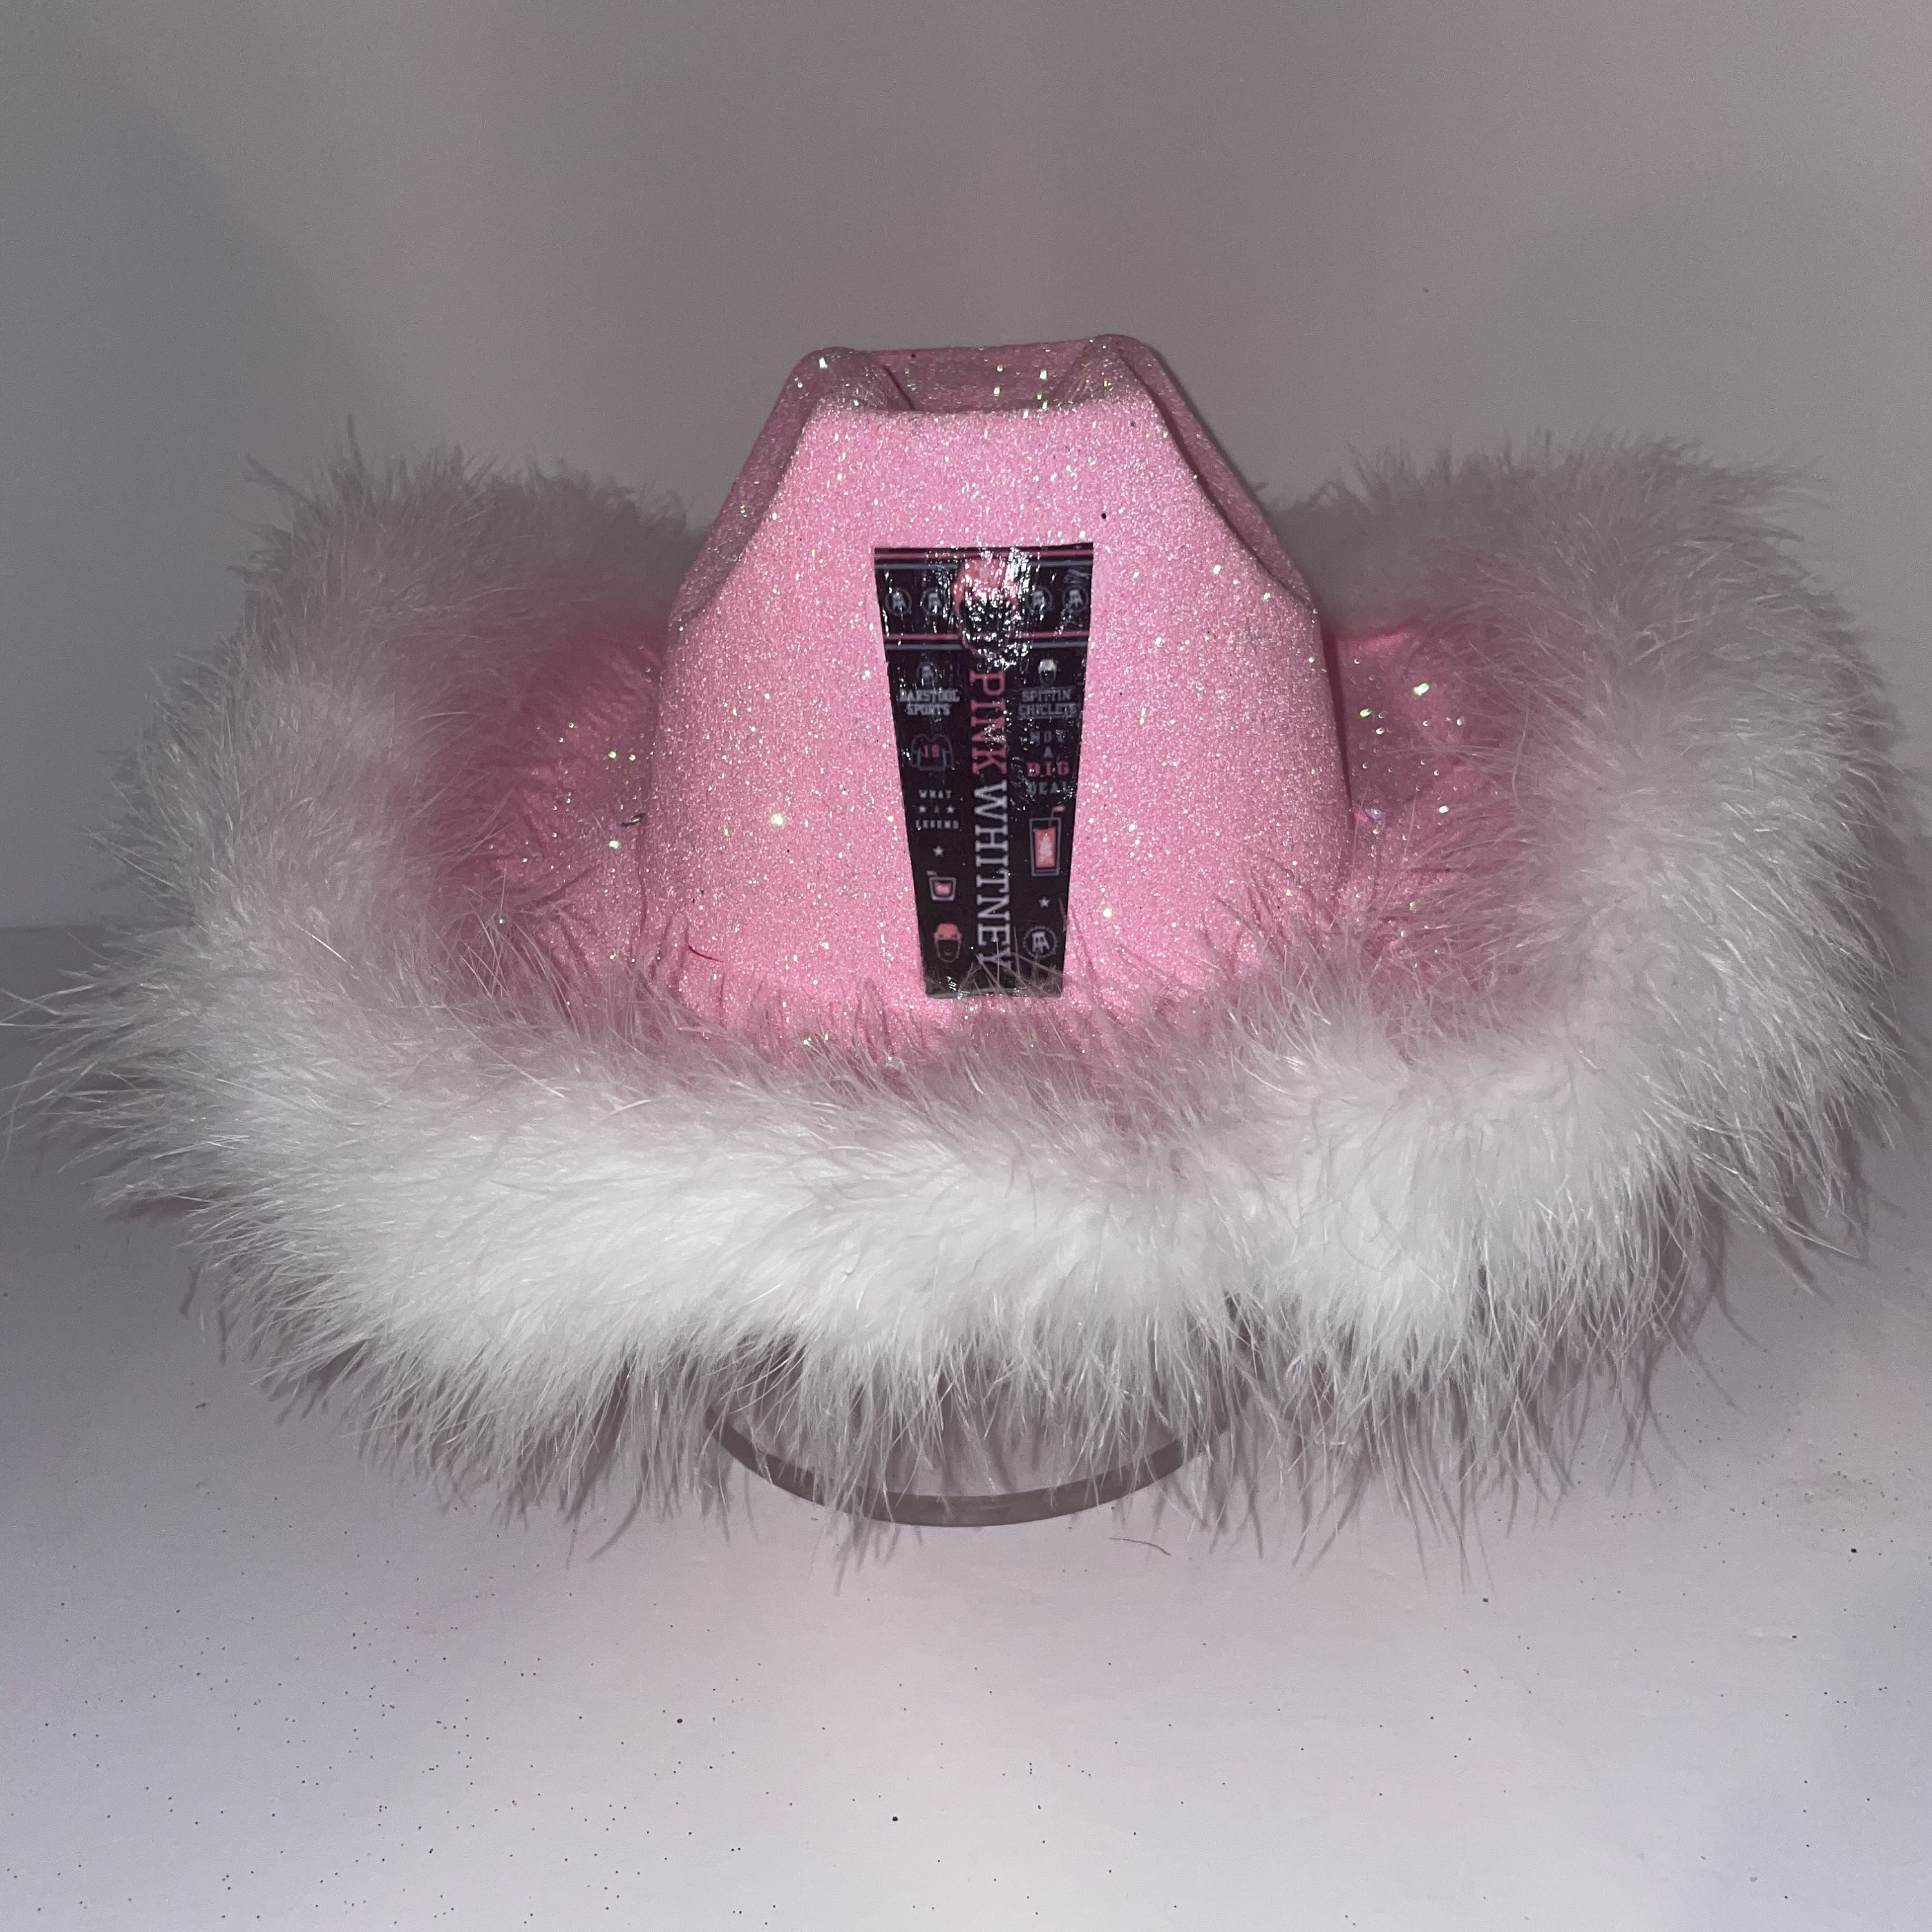 Custom Pink Cowboy Hat - Sprinkled With Pink